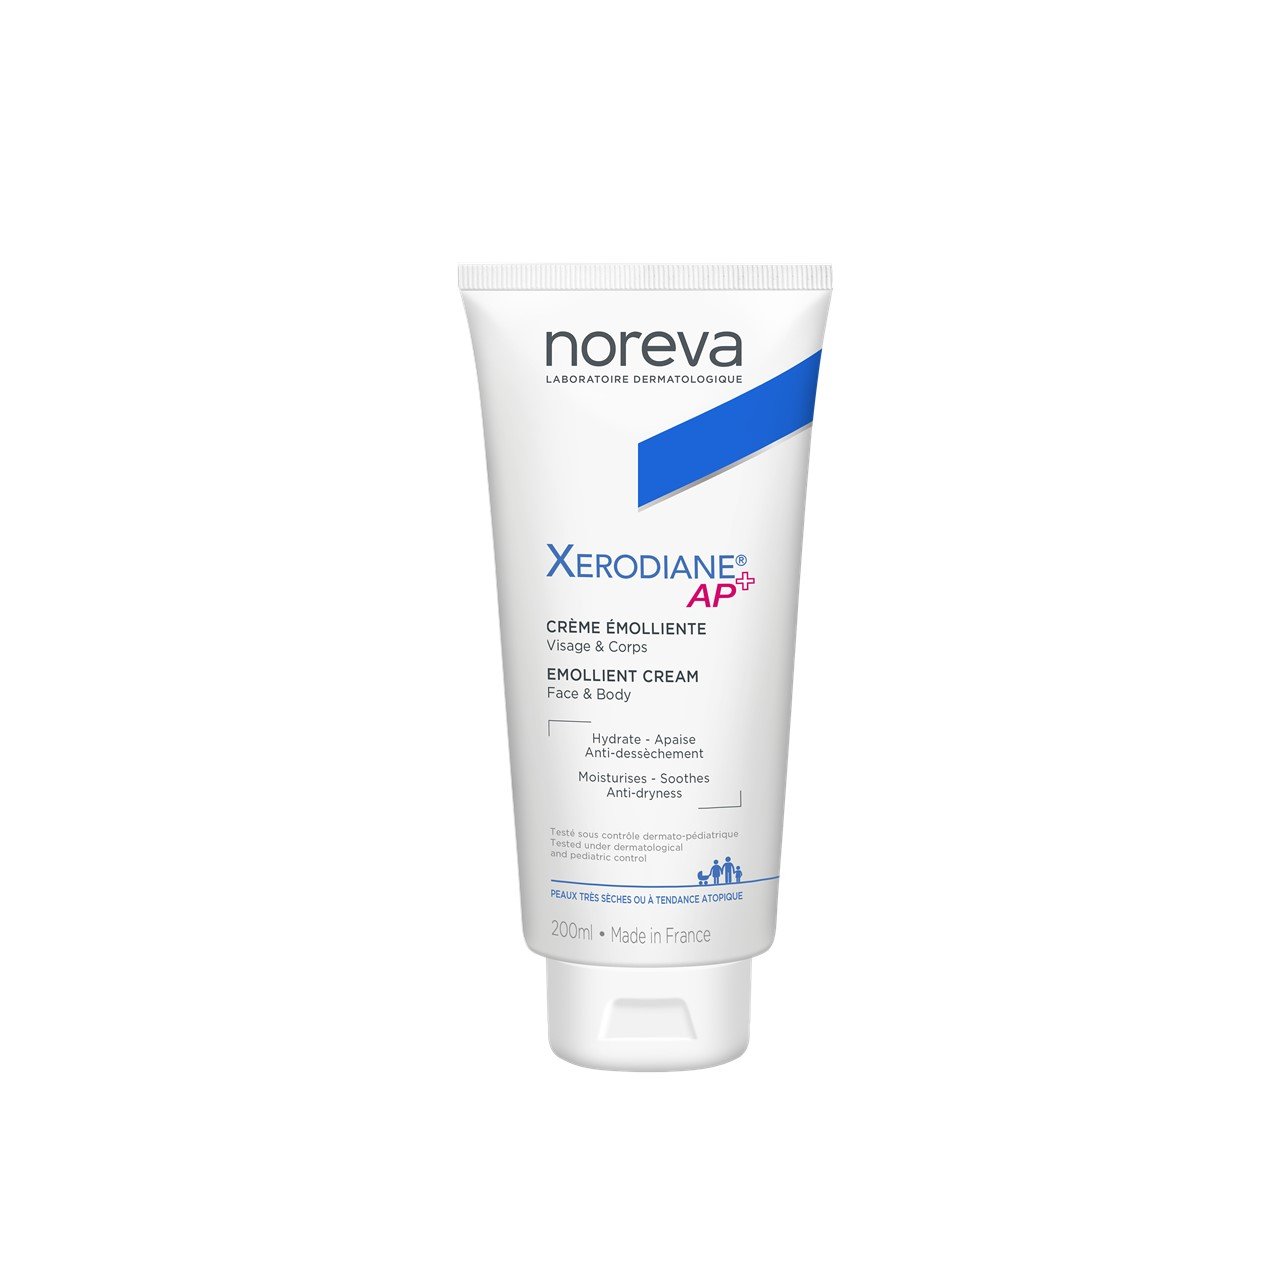 Noreva Xerodiane AP+ Emollient Cream Dry Skin Fragrance-Free 200ml (6.76fl oz)